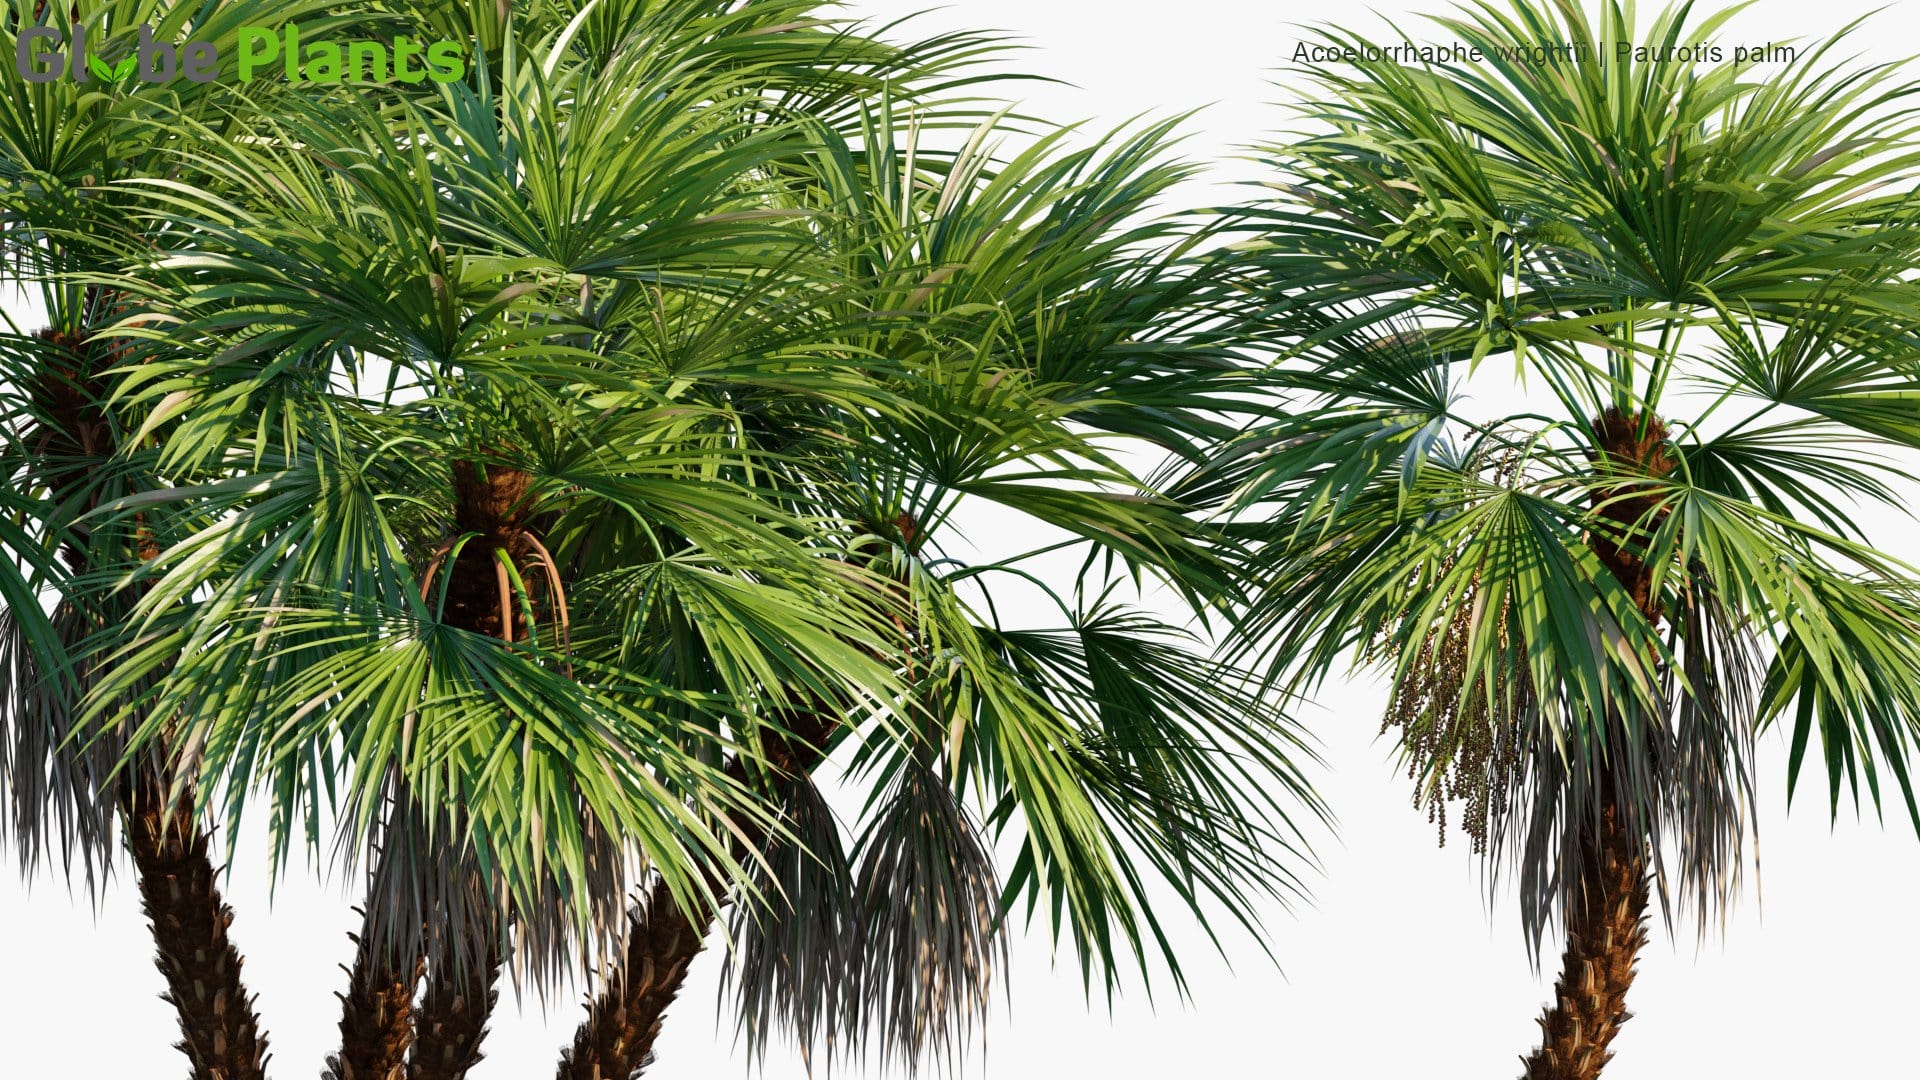 Acoelorrhaphe Wrightii - Paurotis Palm, Everglades Palm, Madeira Palm (3D Model)